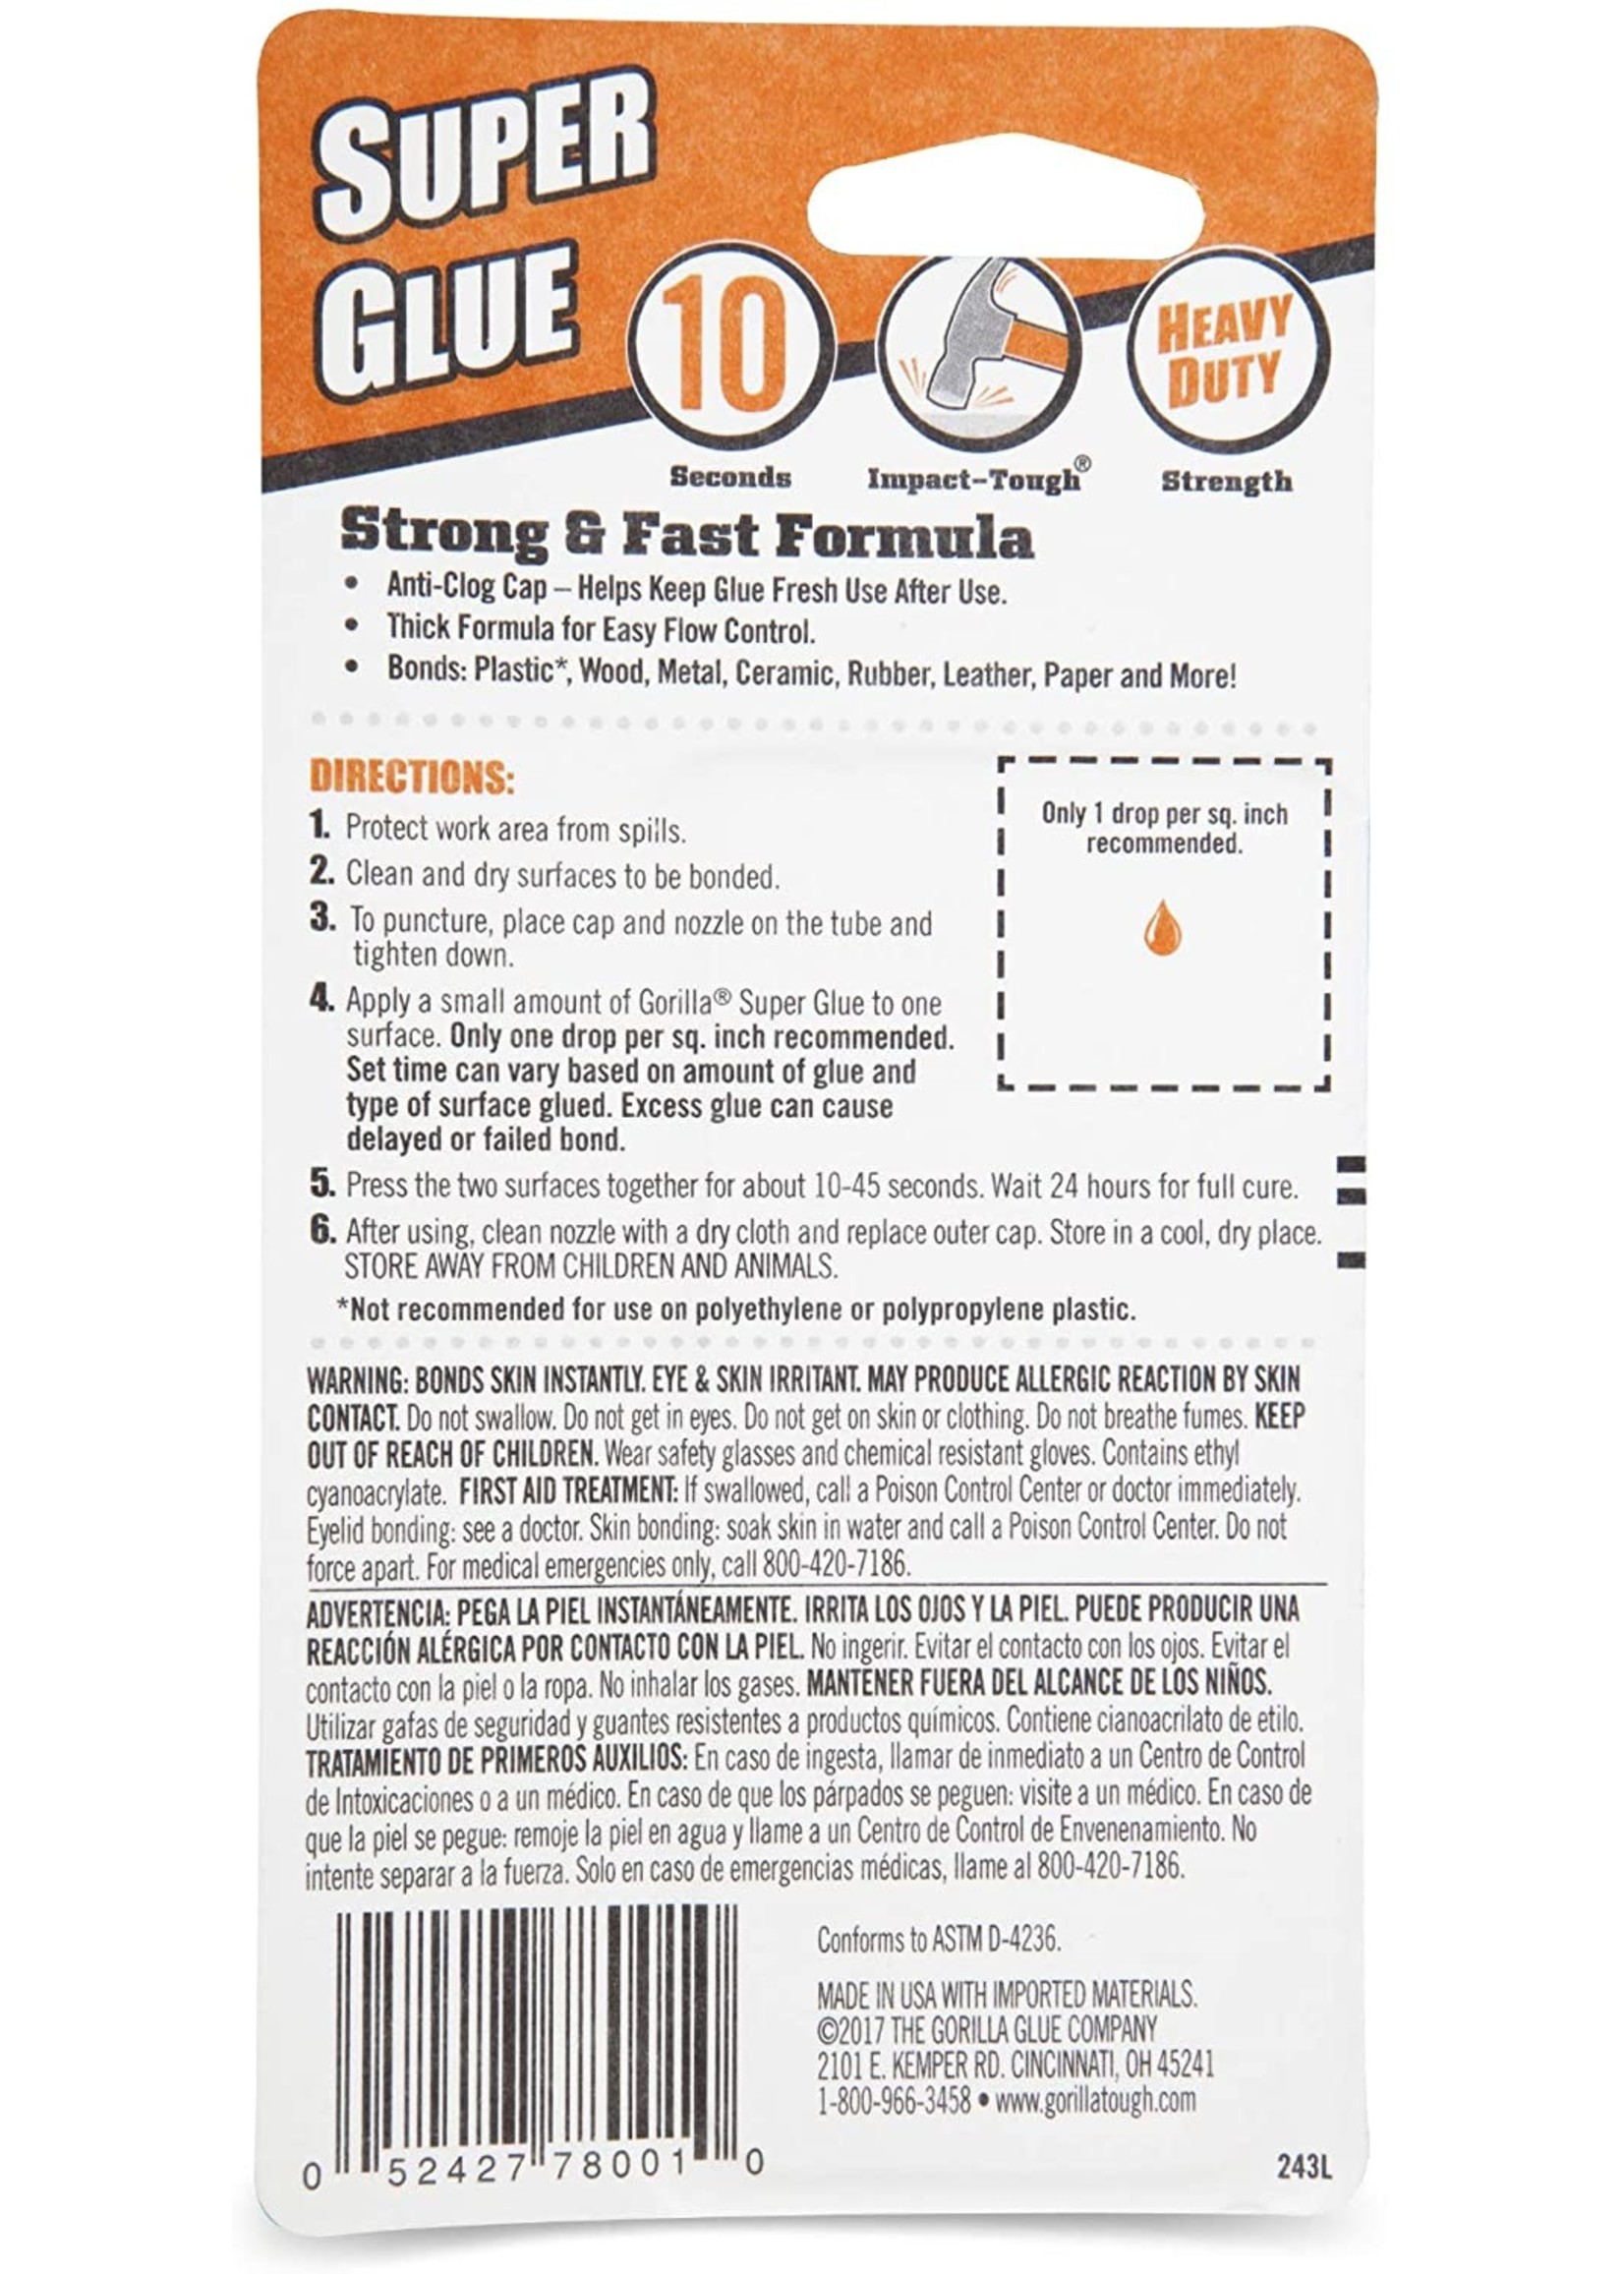 Gorilla Glue 7400202 - Gorilla Super Glue XL (25g)